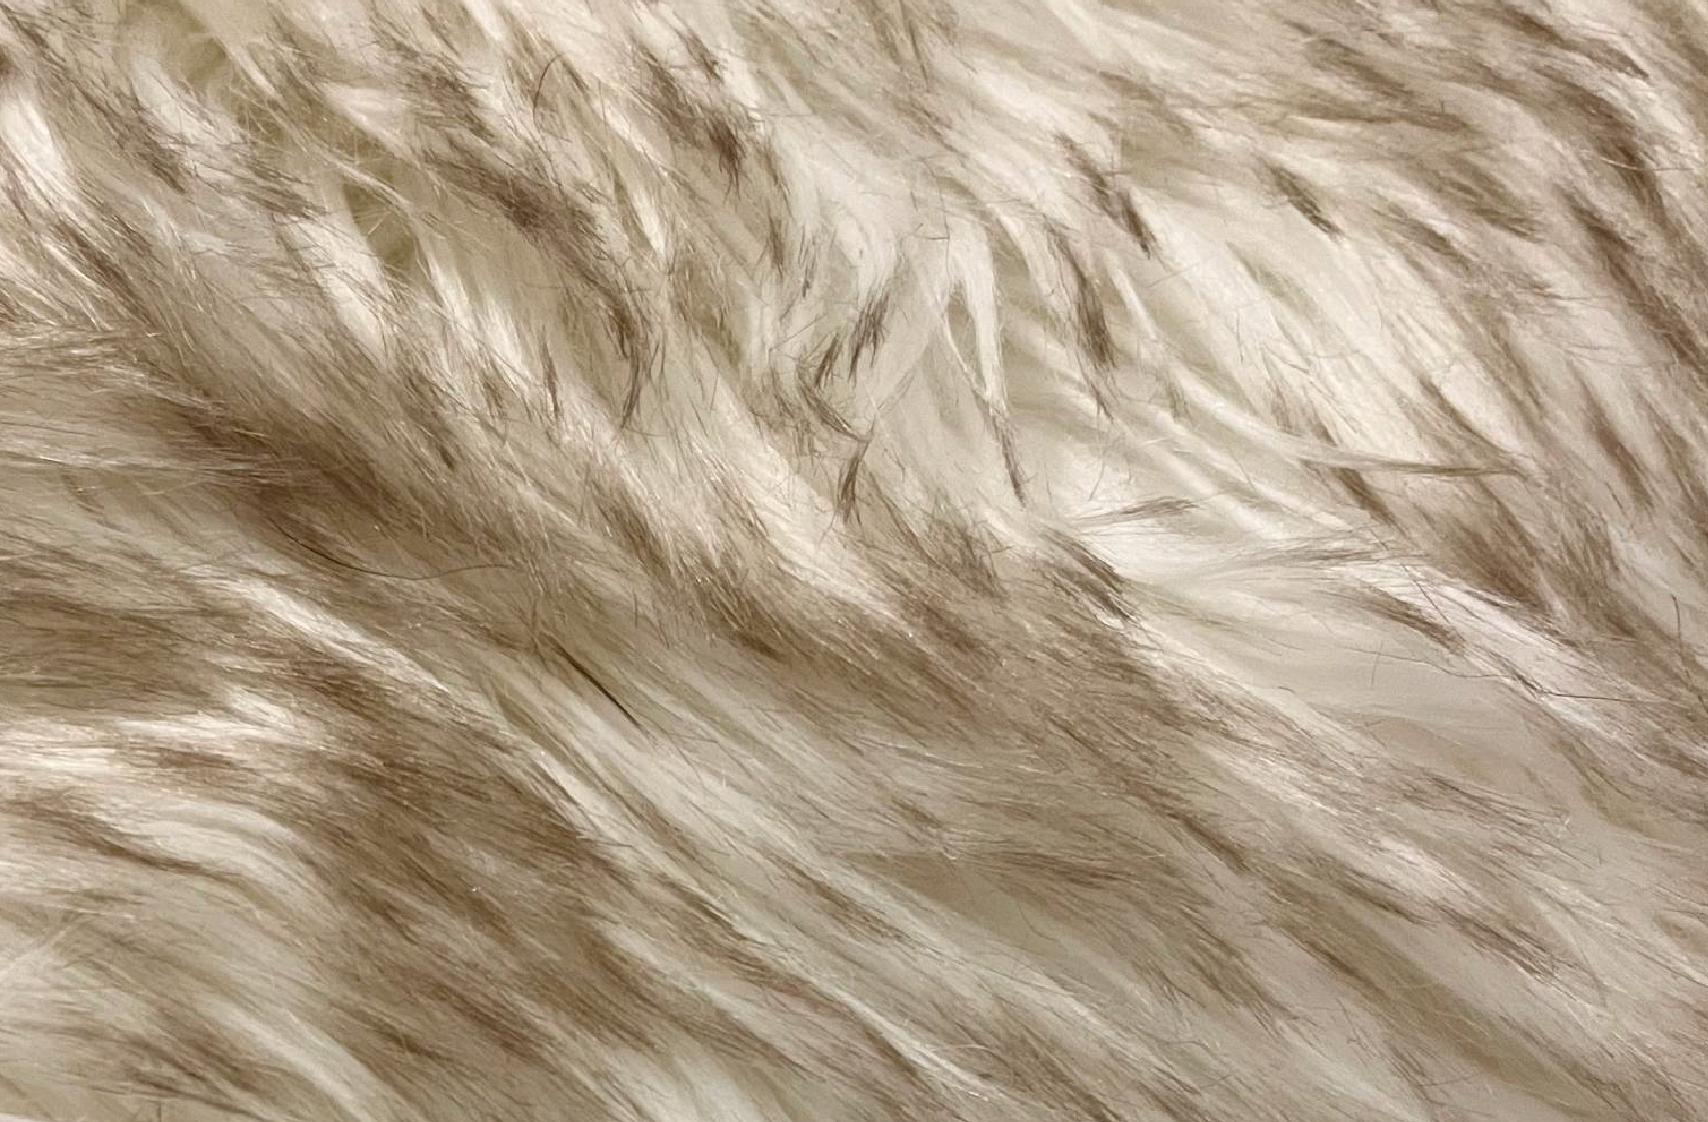 Luxury Memory Foam Dog Bed - Faux Fur Nordic Rug Style